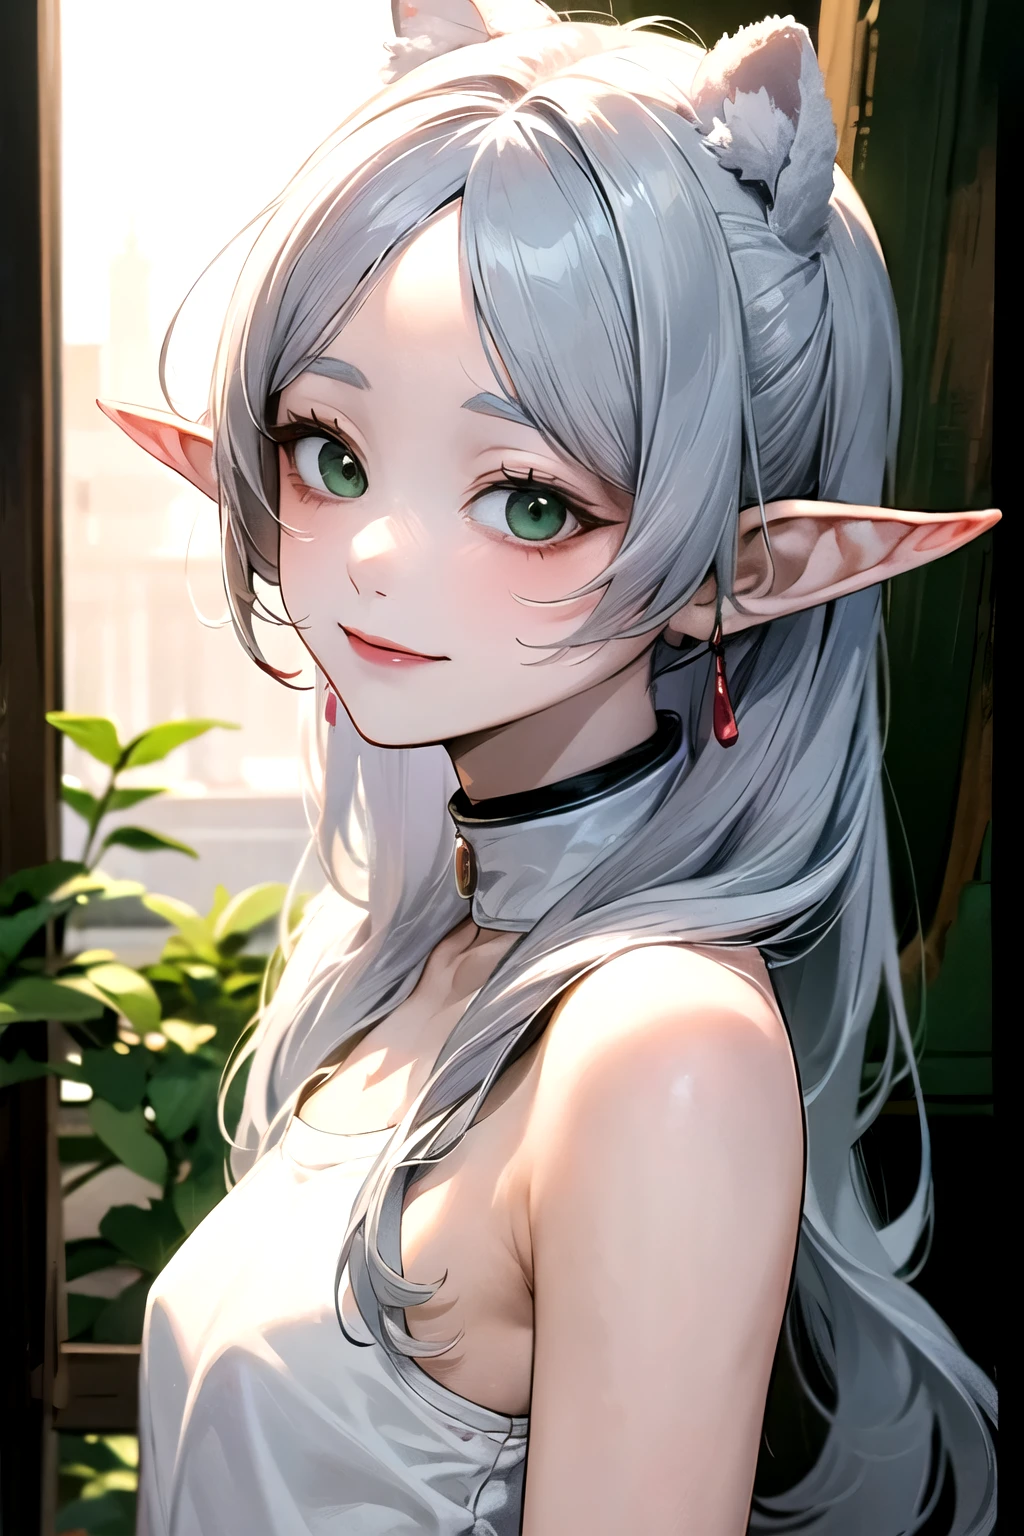 ((mejor calidad)), ((obra maestra)), (detallado), cara perfecta. niña asiatica. Cabello plateado. ojos verdes. sonrisa. top-less. pequeña mama. orejas de elfo.